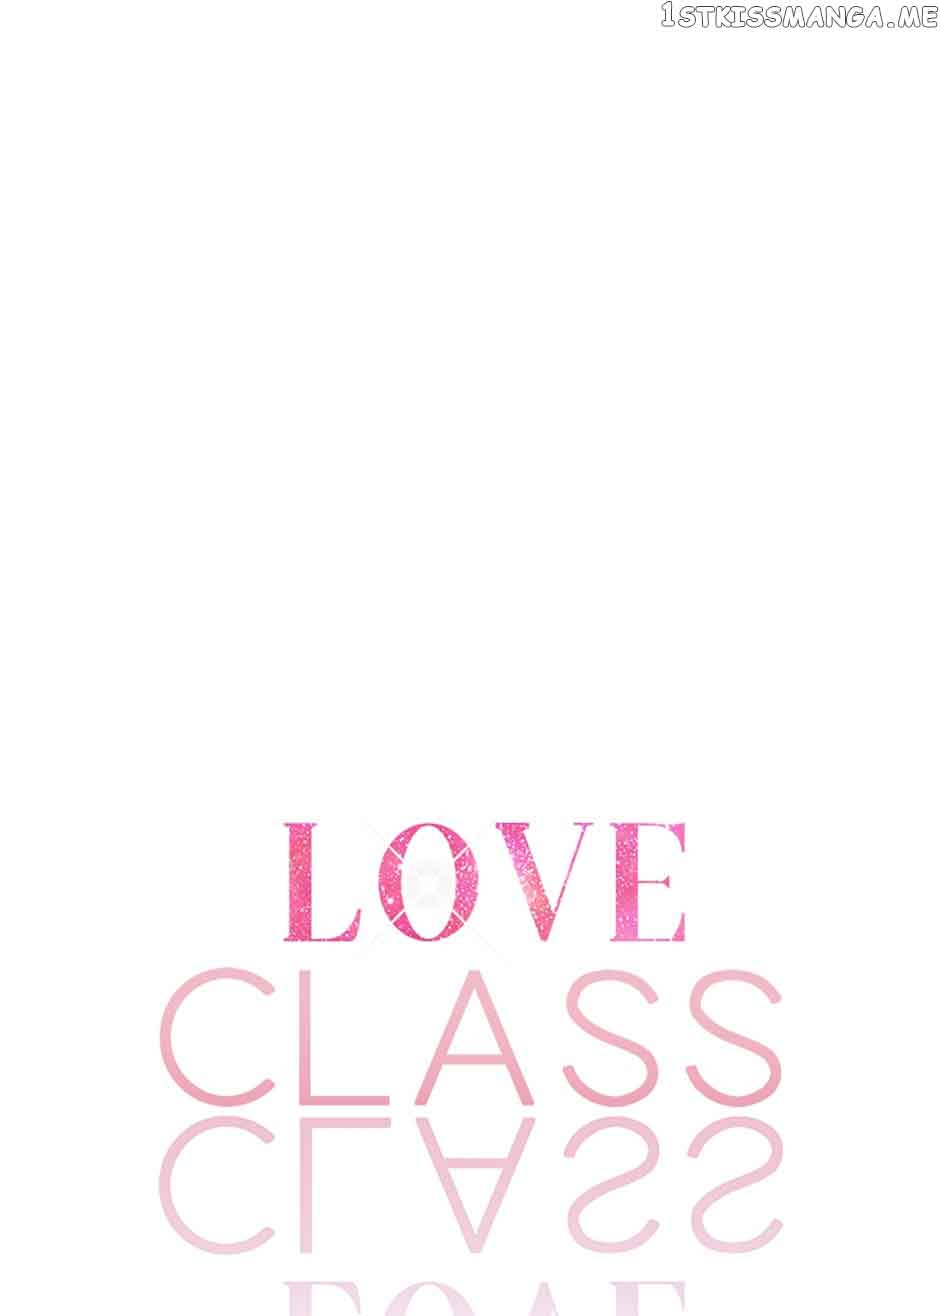 Love Class chapter 15